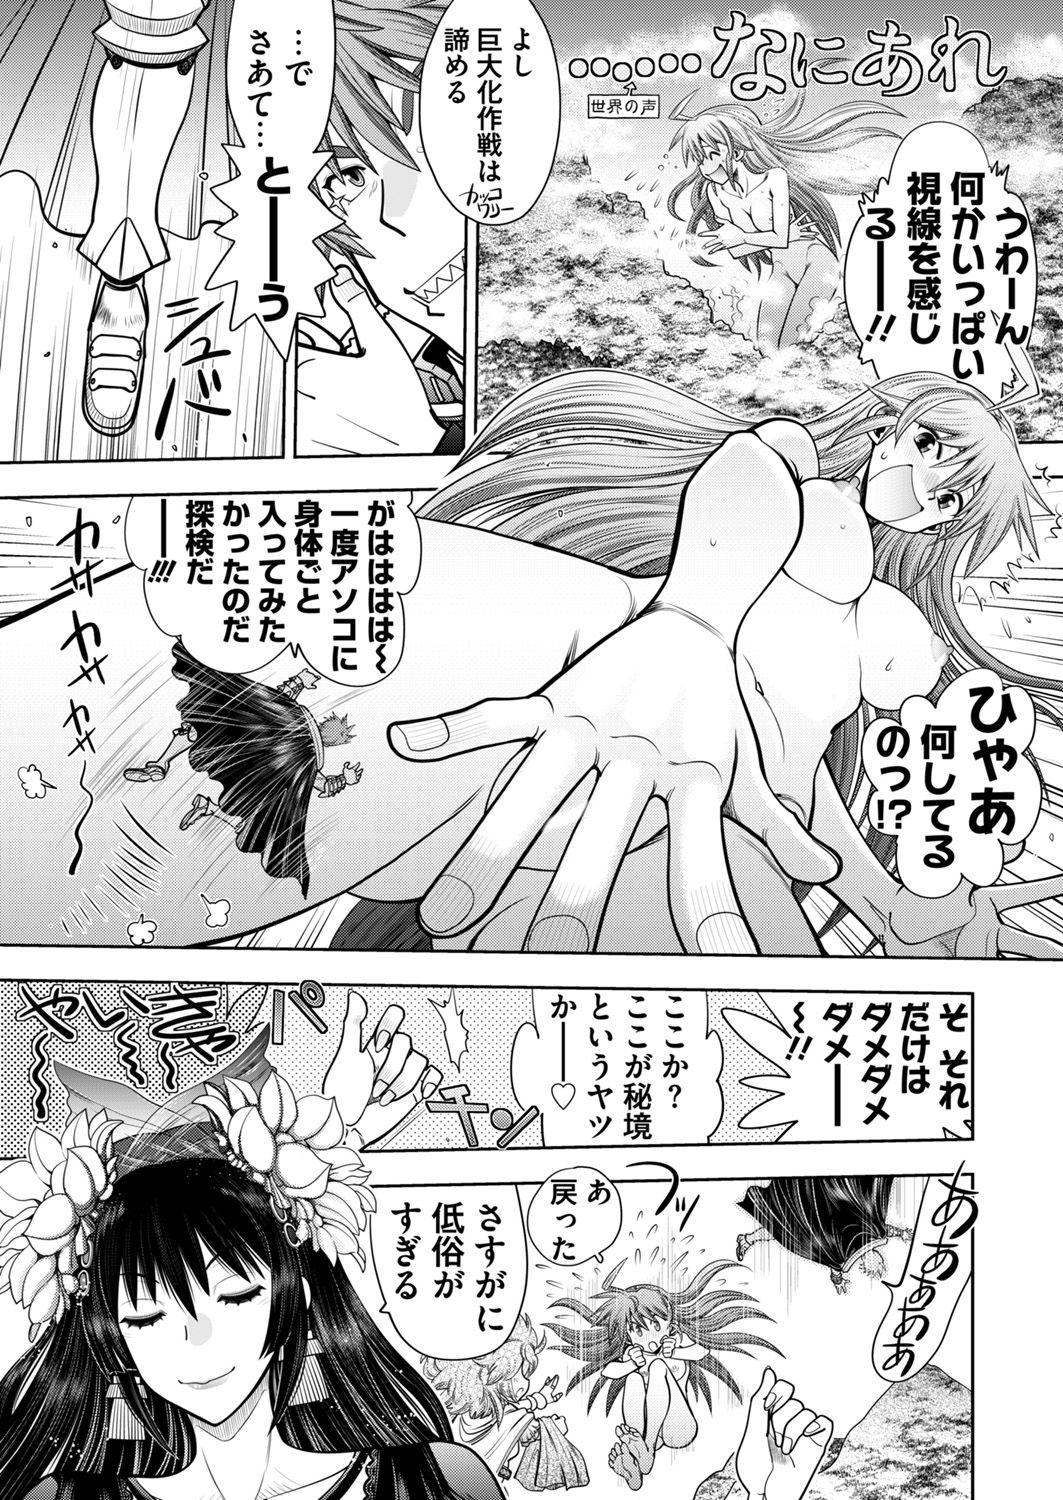 Animation [Yagami Dai] Rance 10 -Kessen- Ch 03-05 - Rance Making Love Porn - Page 5